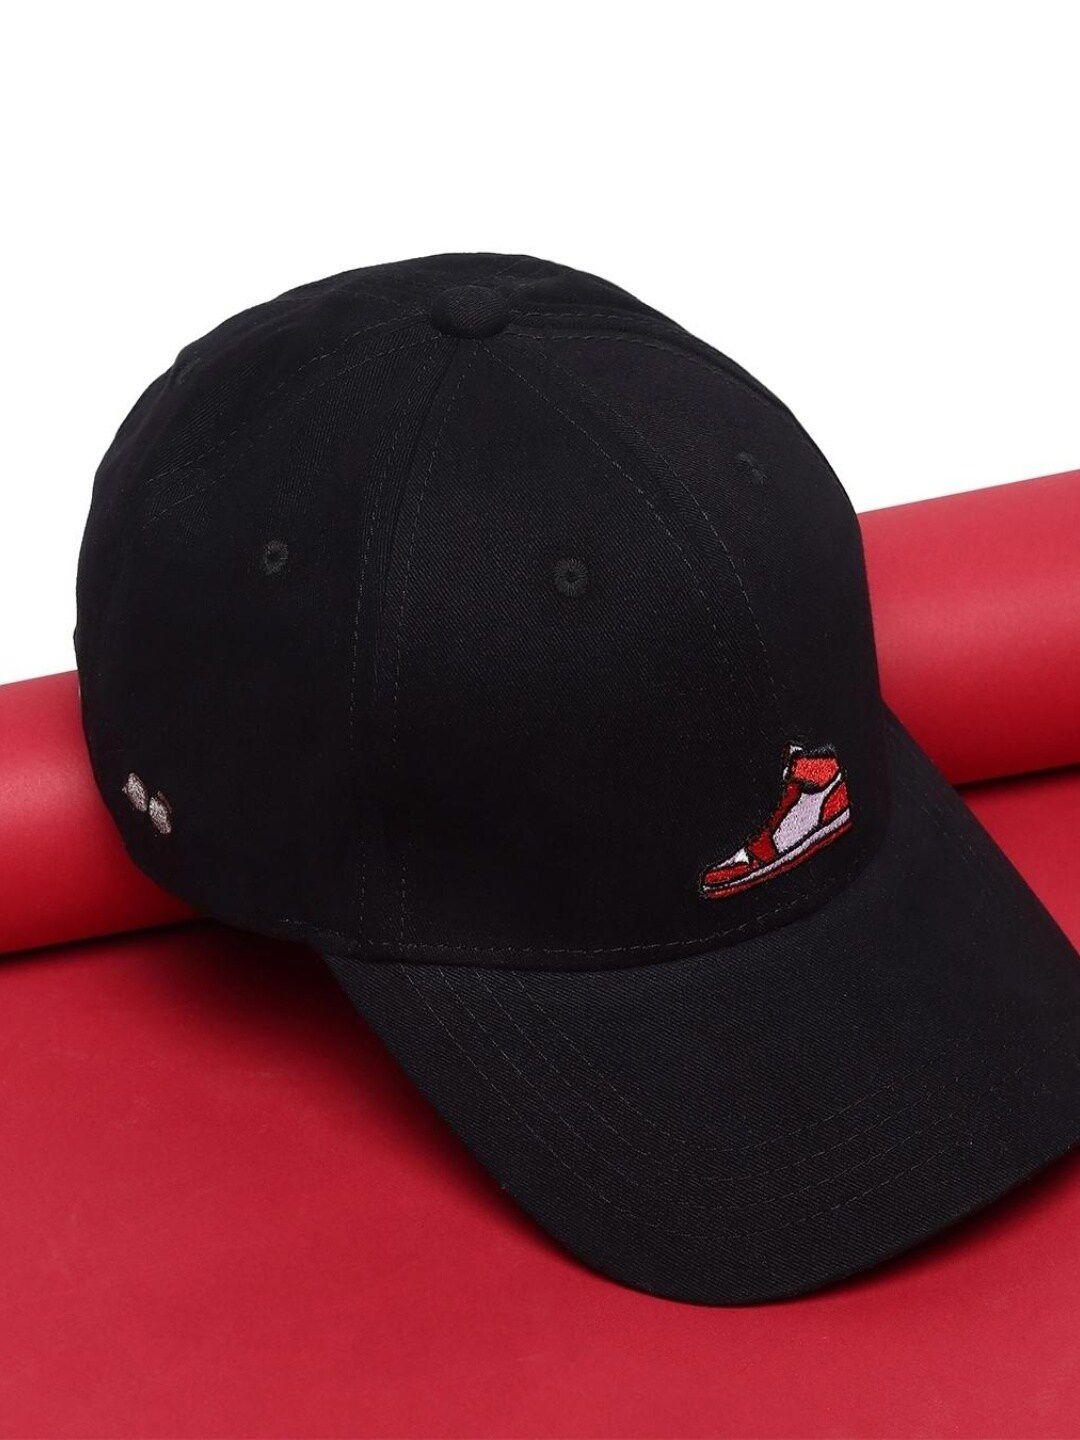 bewakoof embroidered baseball cap